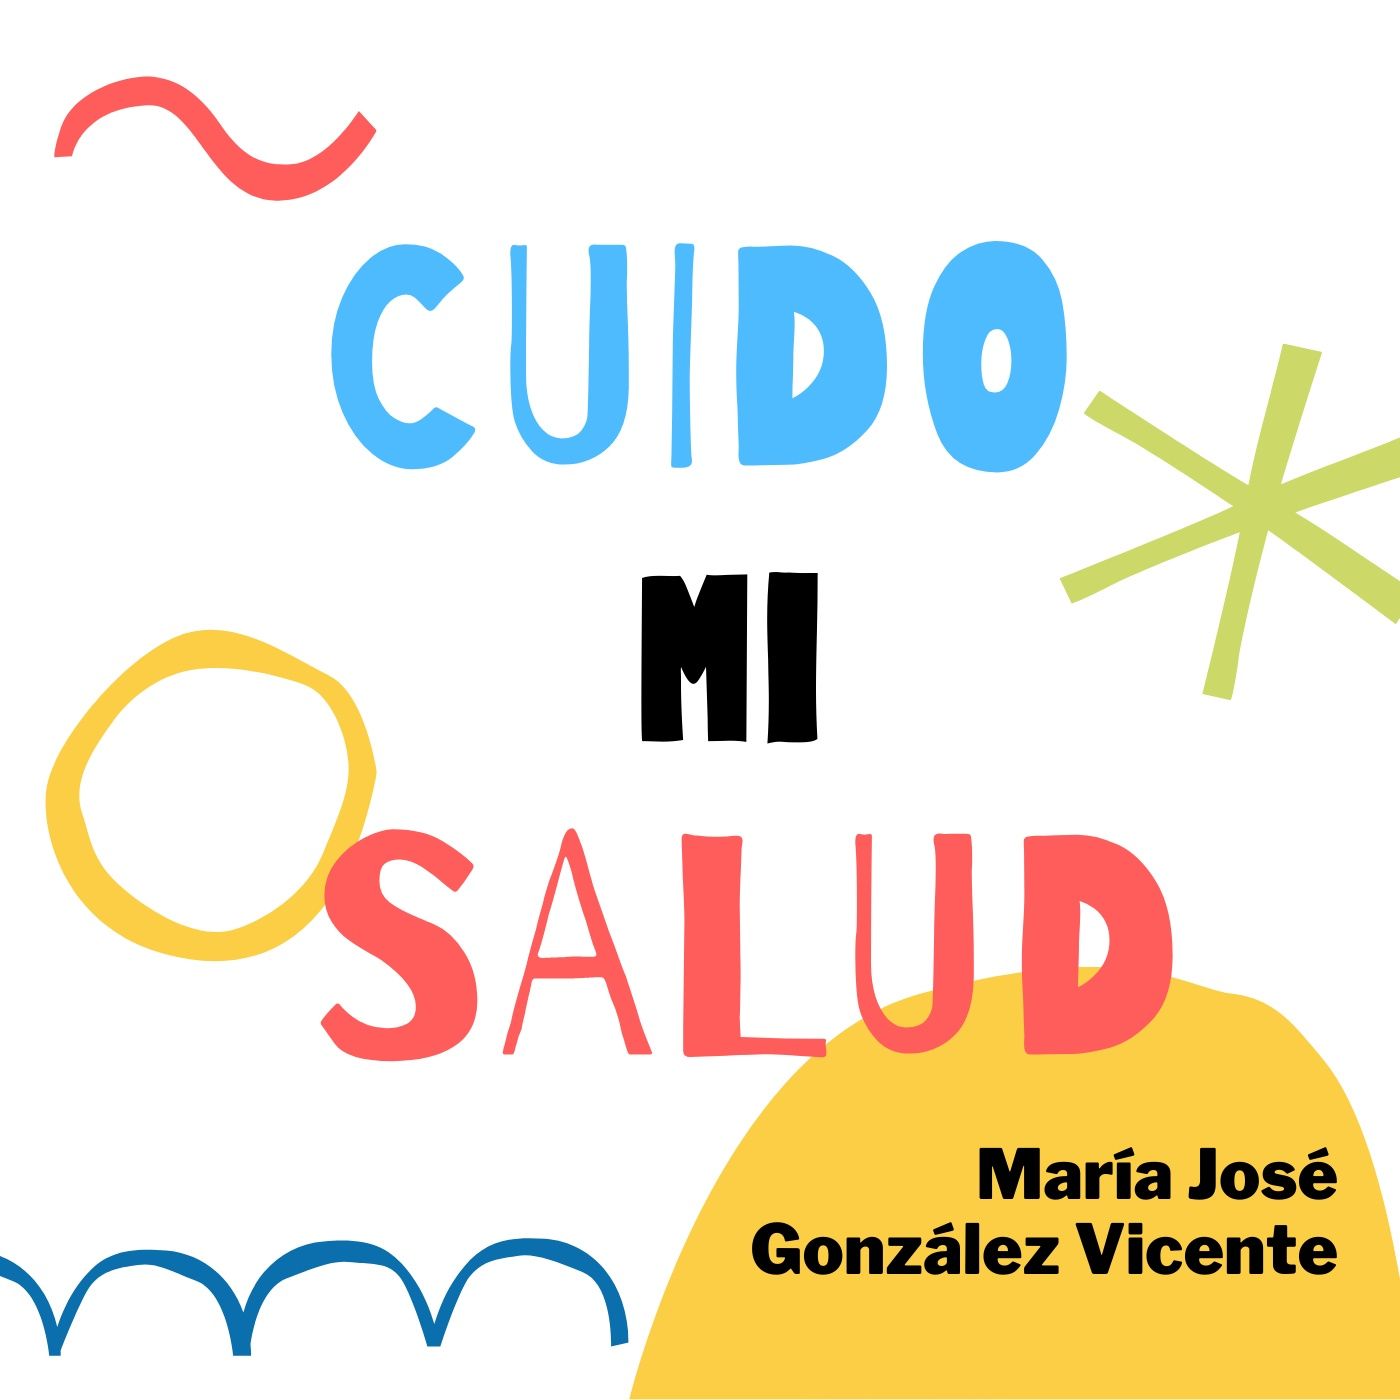 MARIA JOSE GONZALEZ VICENTE's podcast